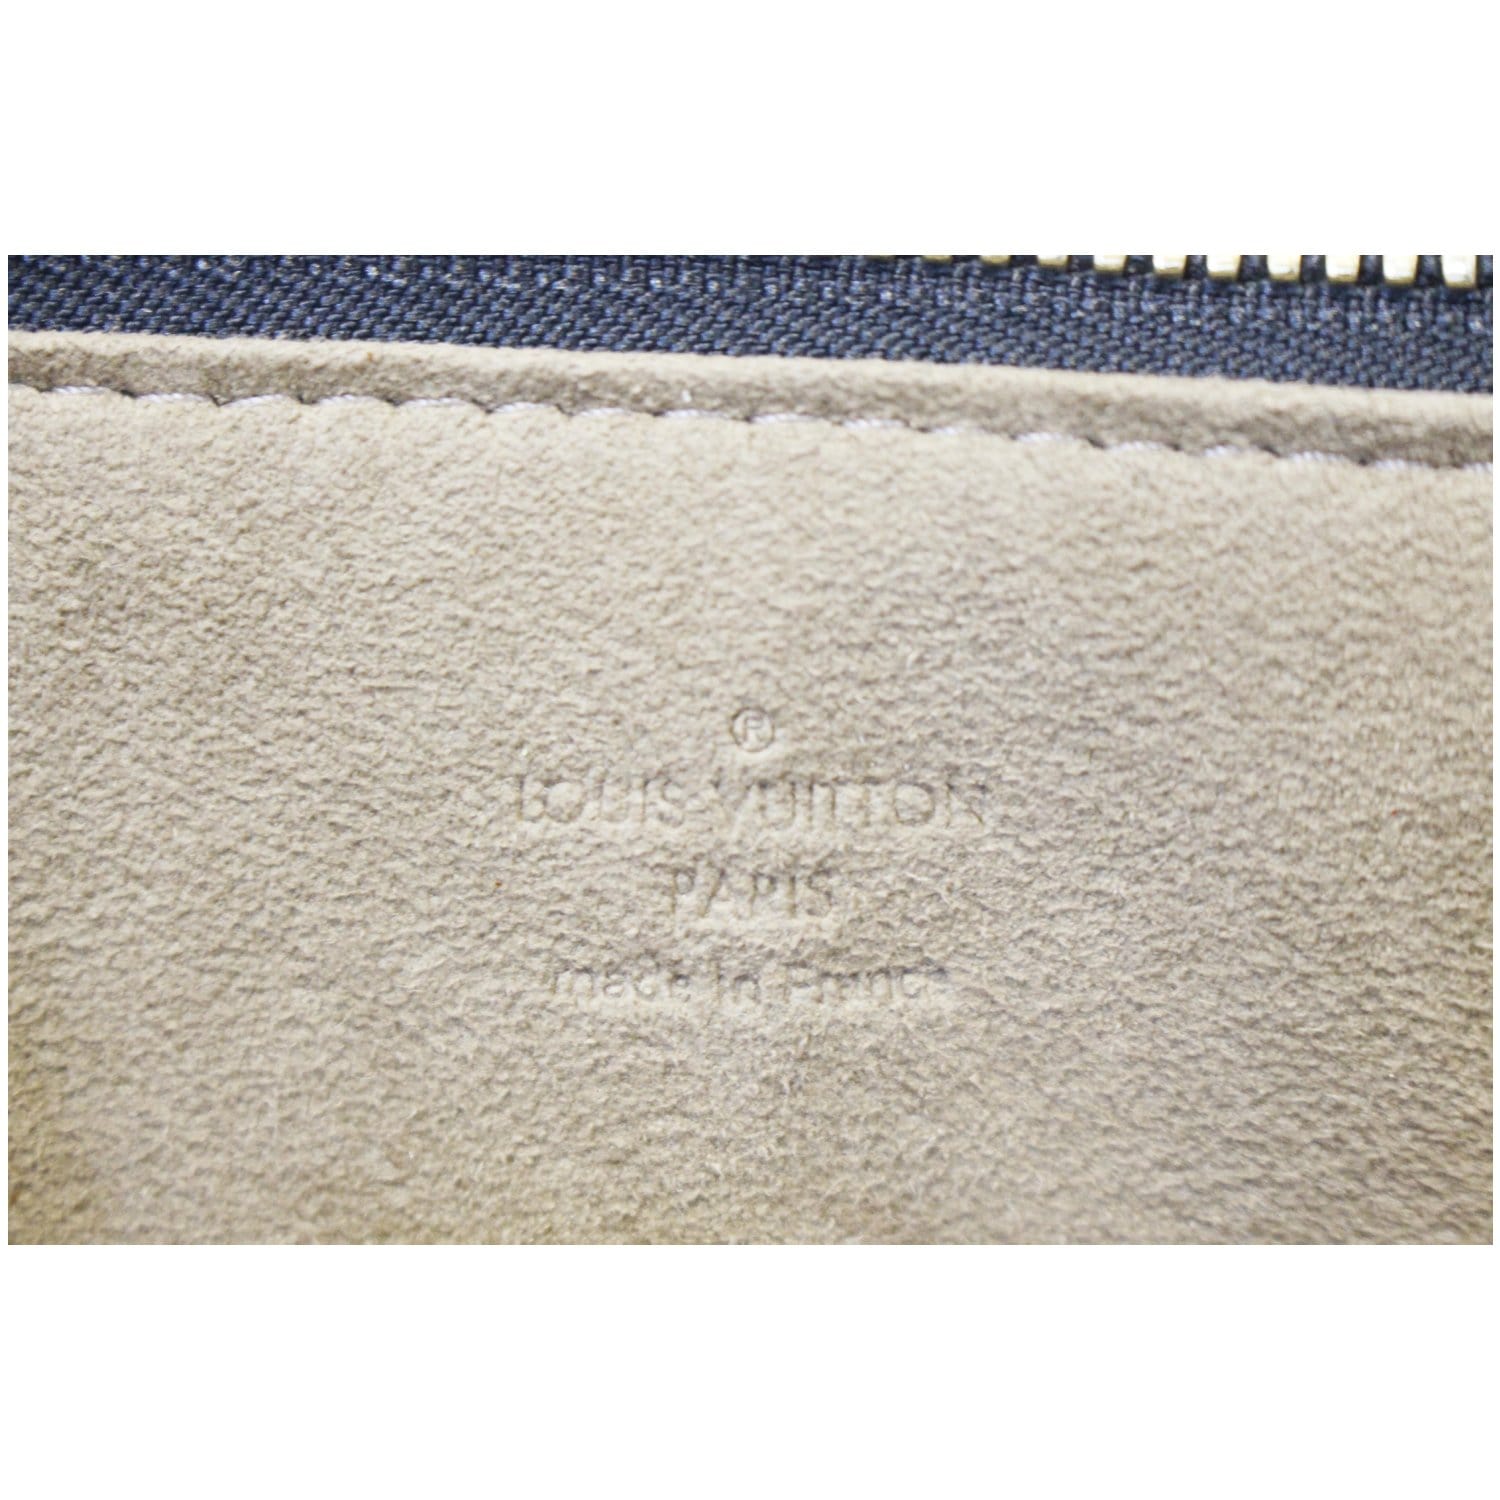 Preloved Louis Vuitton Black Multicolor Monogram Rita Shoulder Bag DU0 –  KimmieBBags LLC